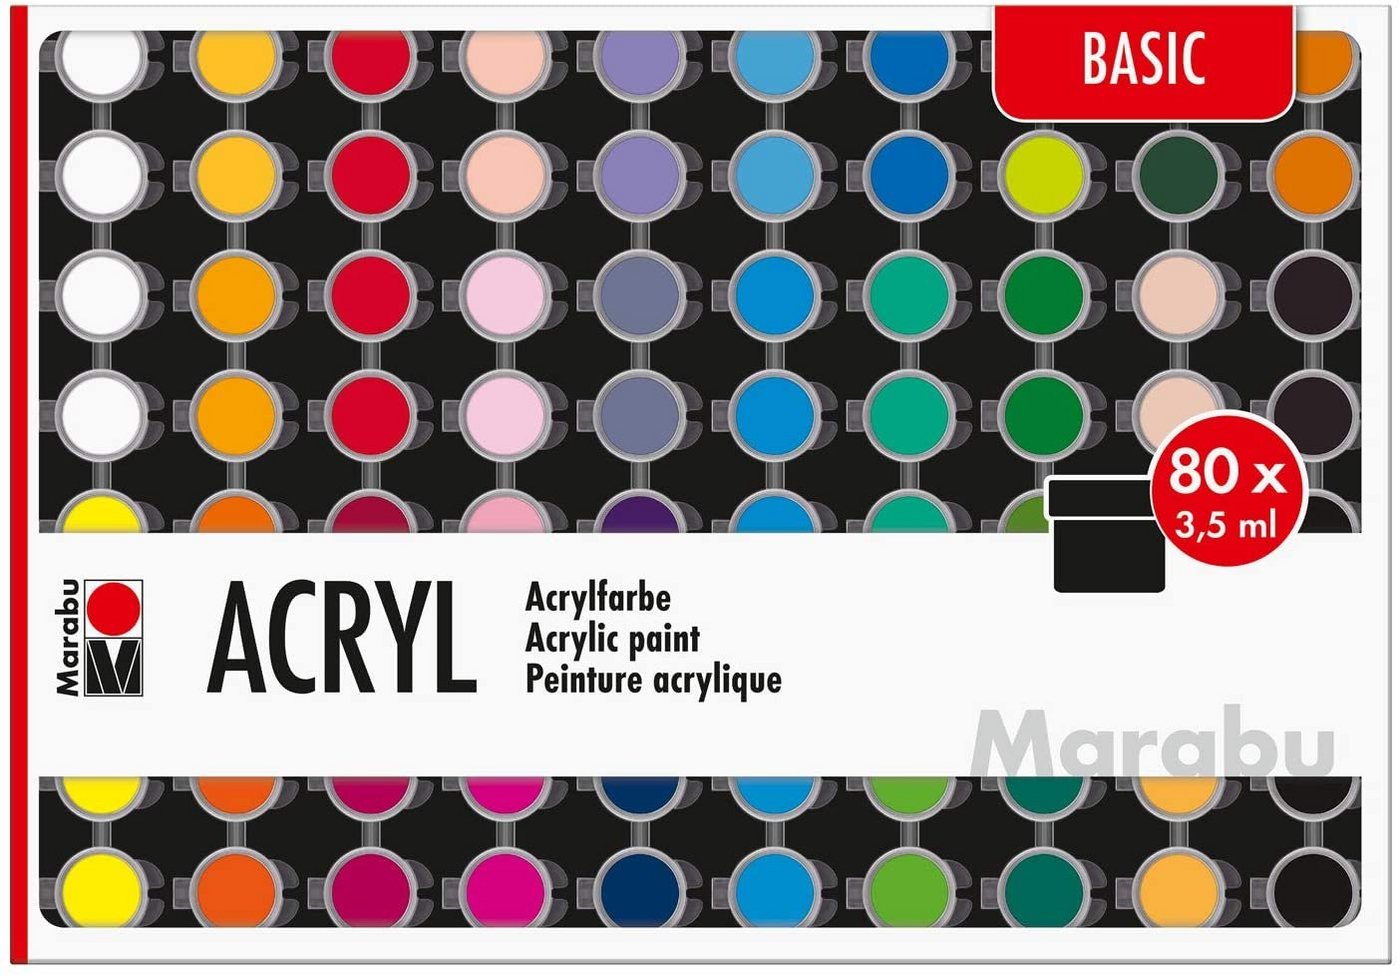 Marabu Acrylfarbe Marabu Acrylfarben-Set BASIC", 80 x 3,5 ml" von Marabu